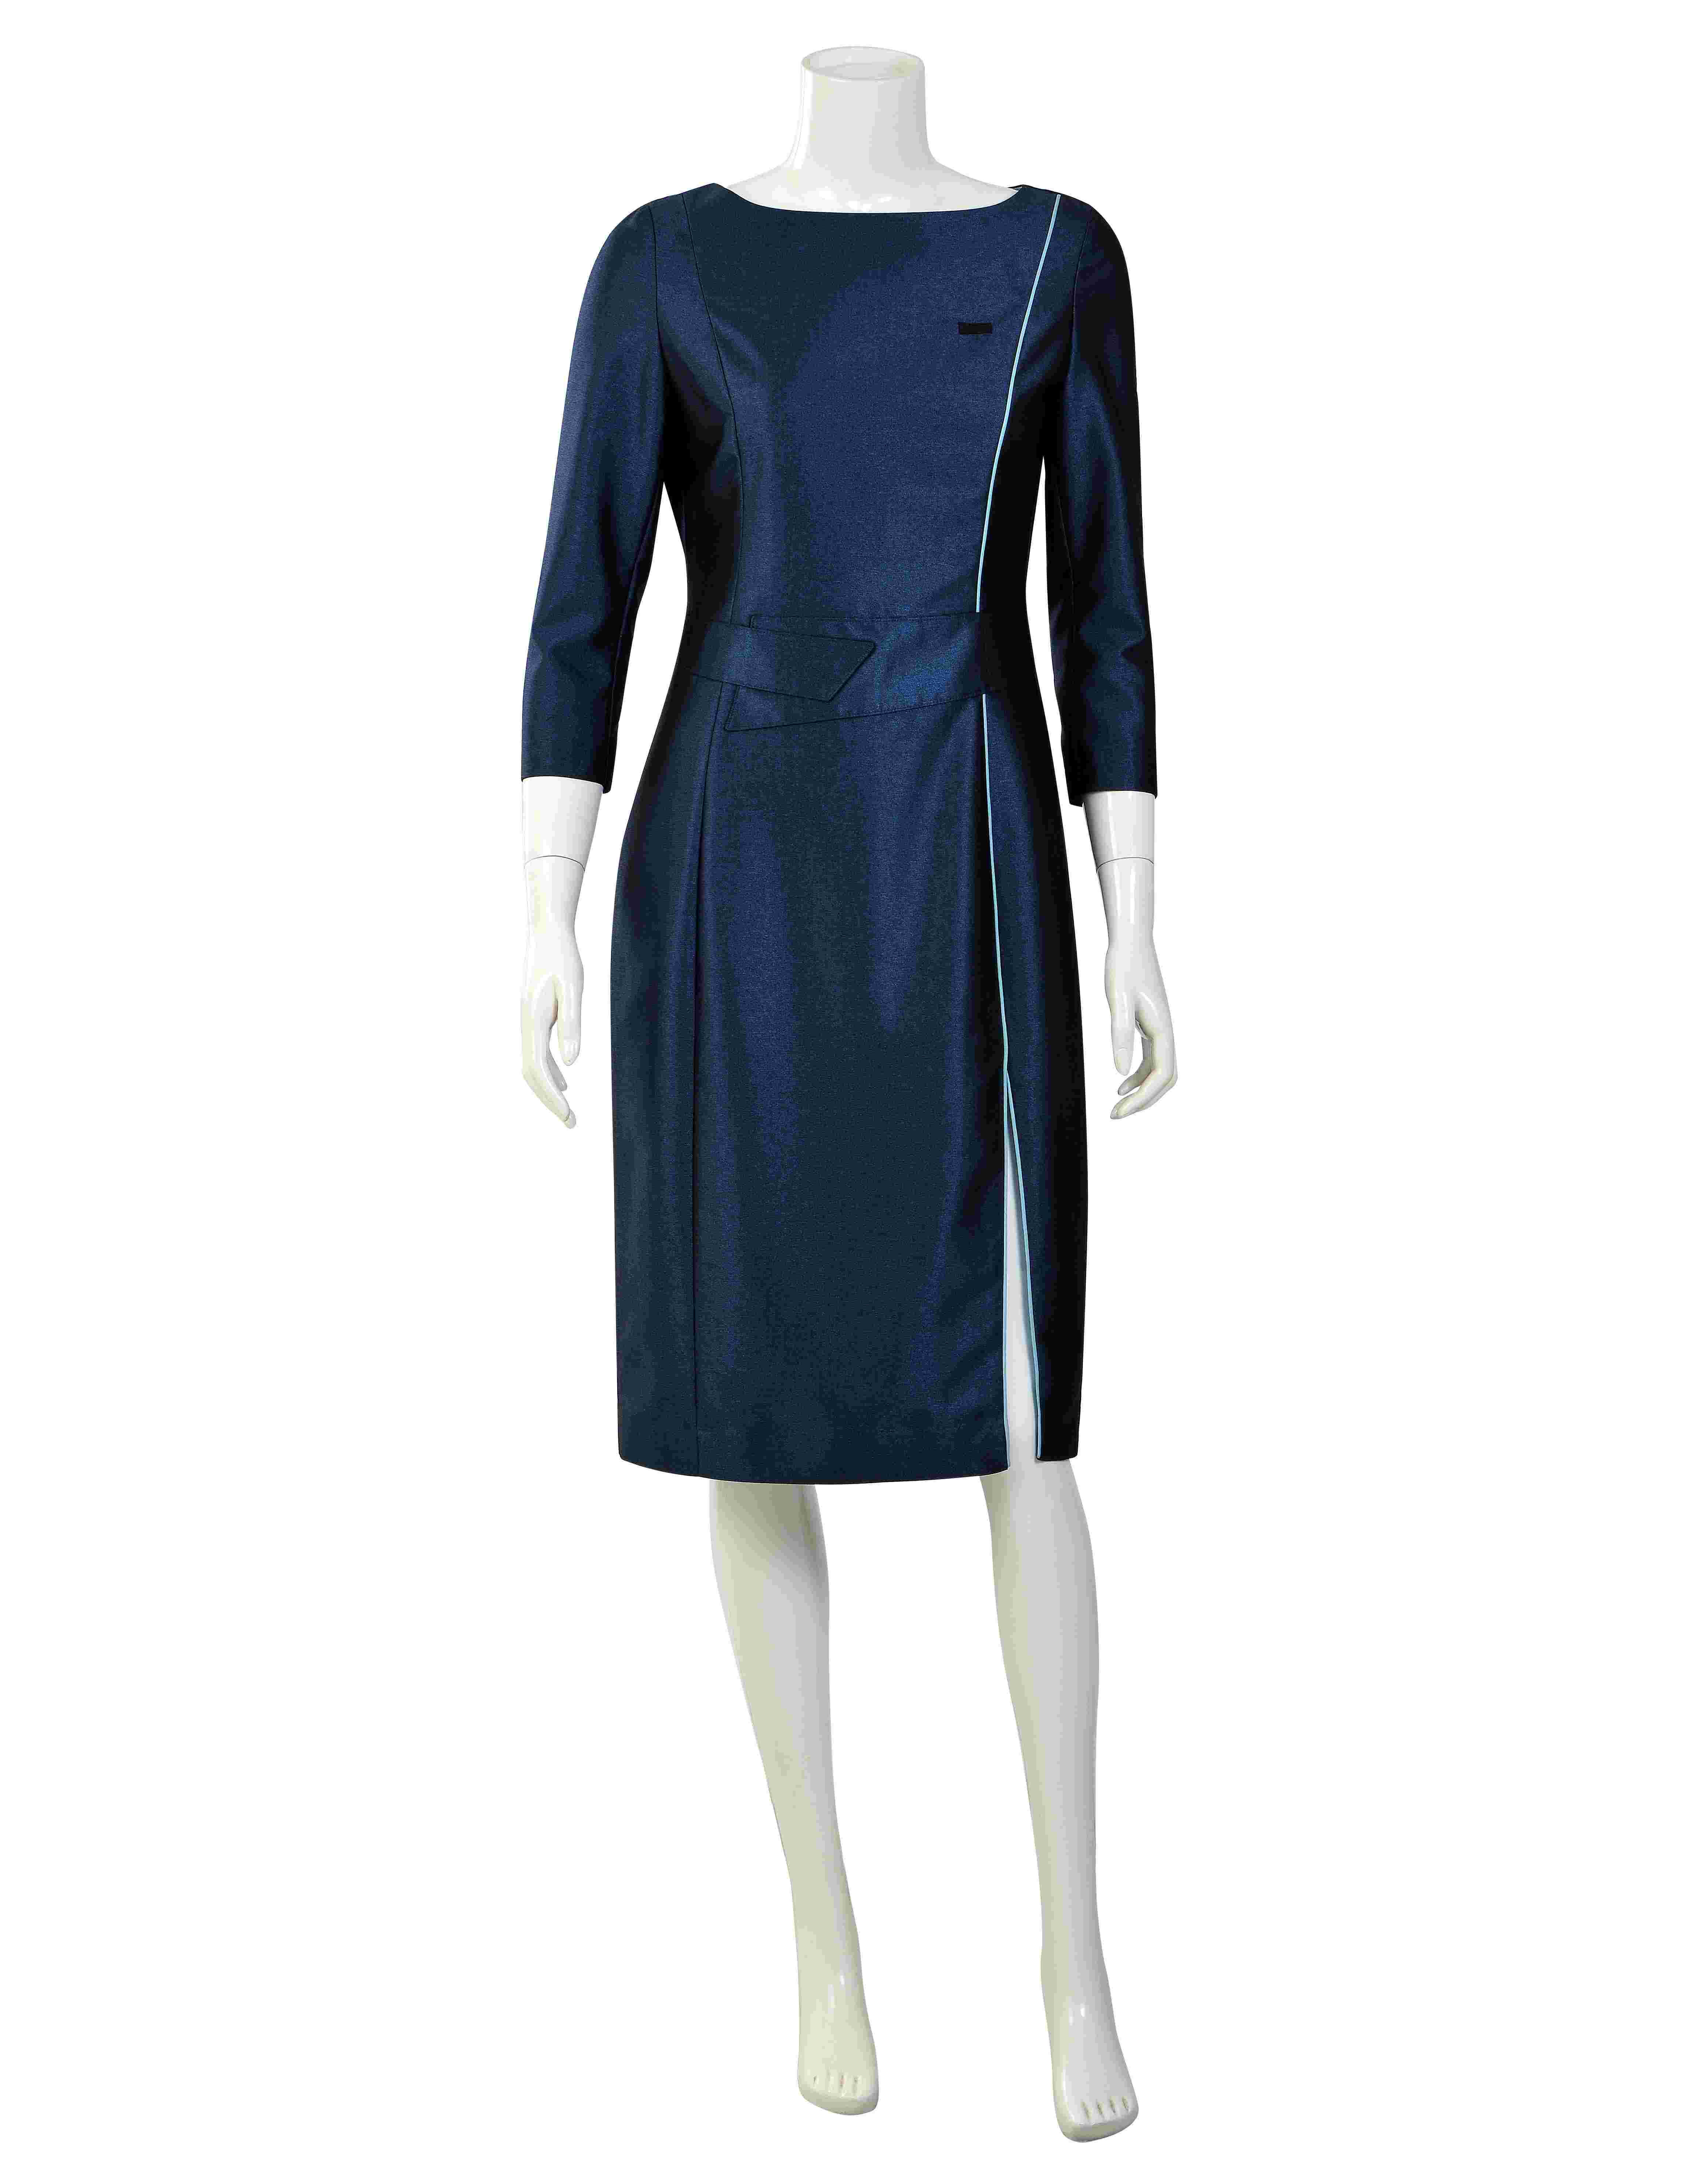 Ladies 3/4 sleeve casual woven uniform dress